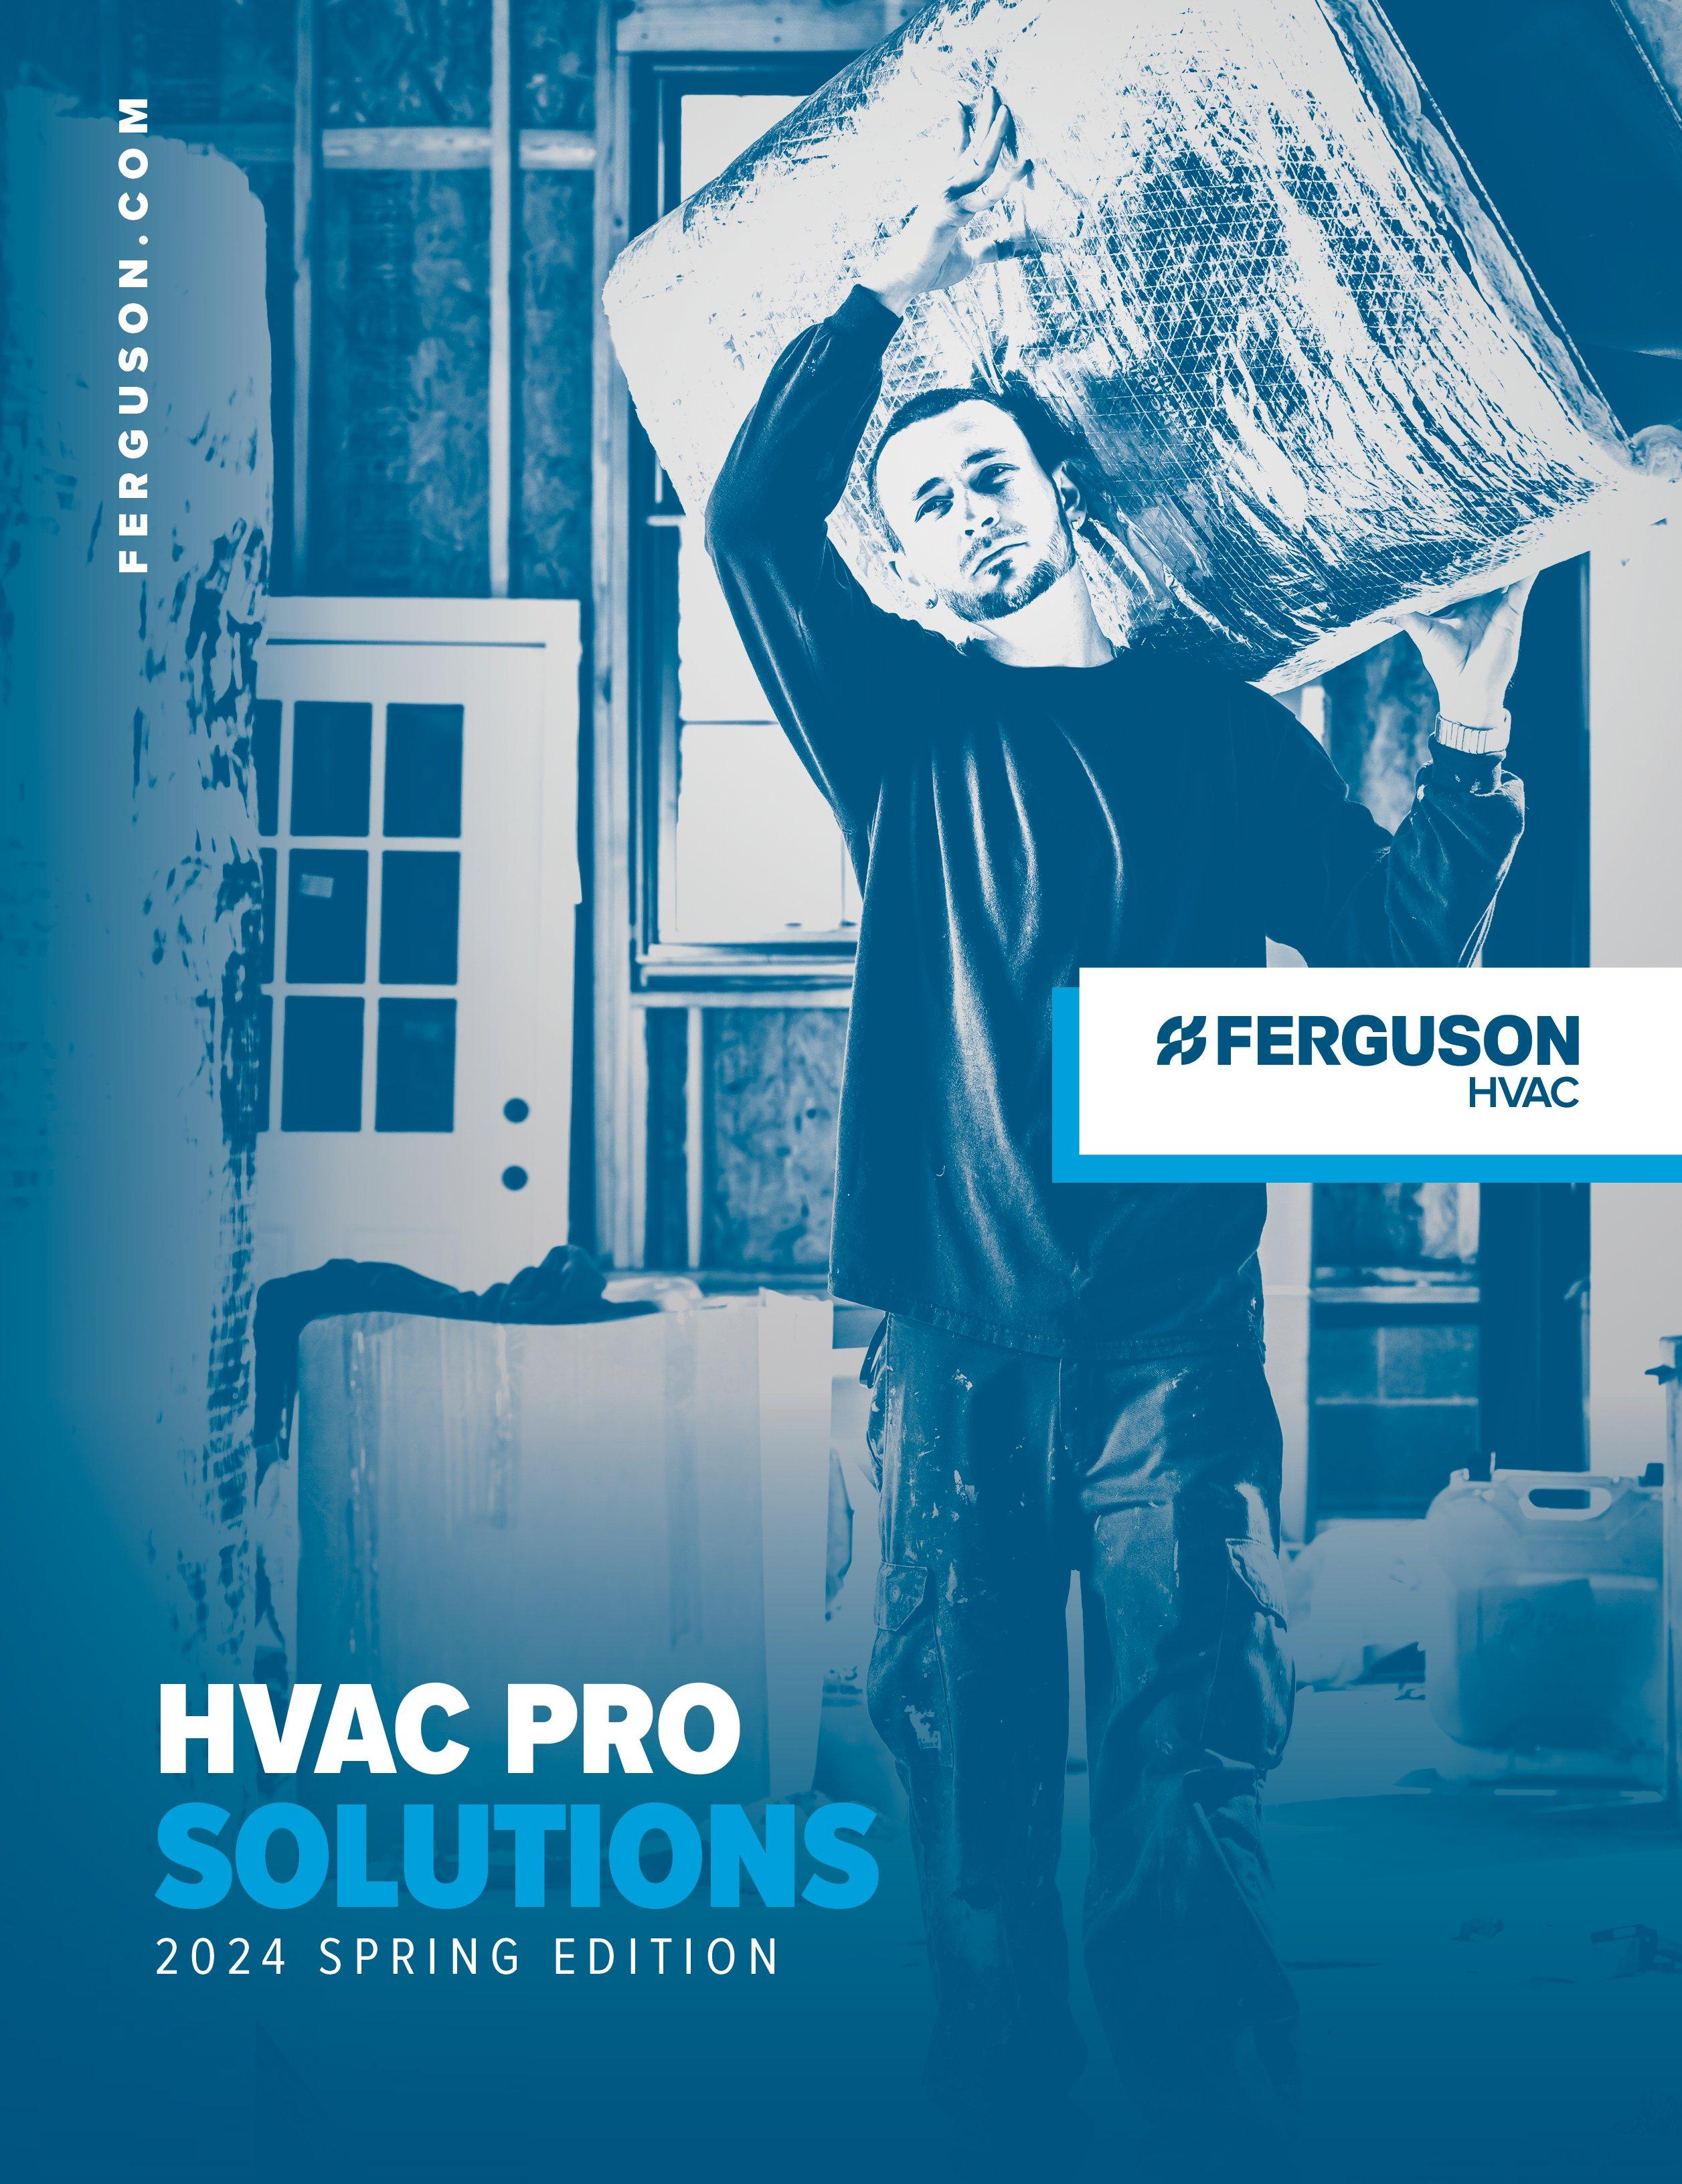 The Ferguson HVAC logo laid over an image of an HVAC technician.